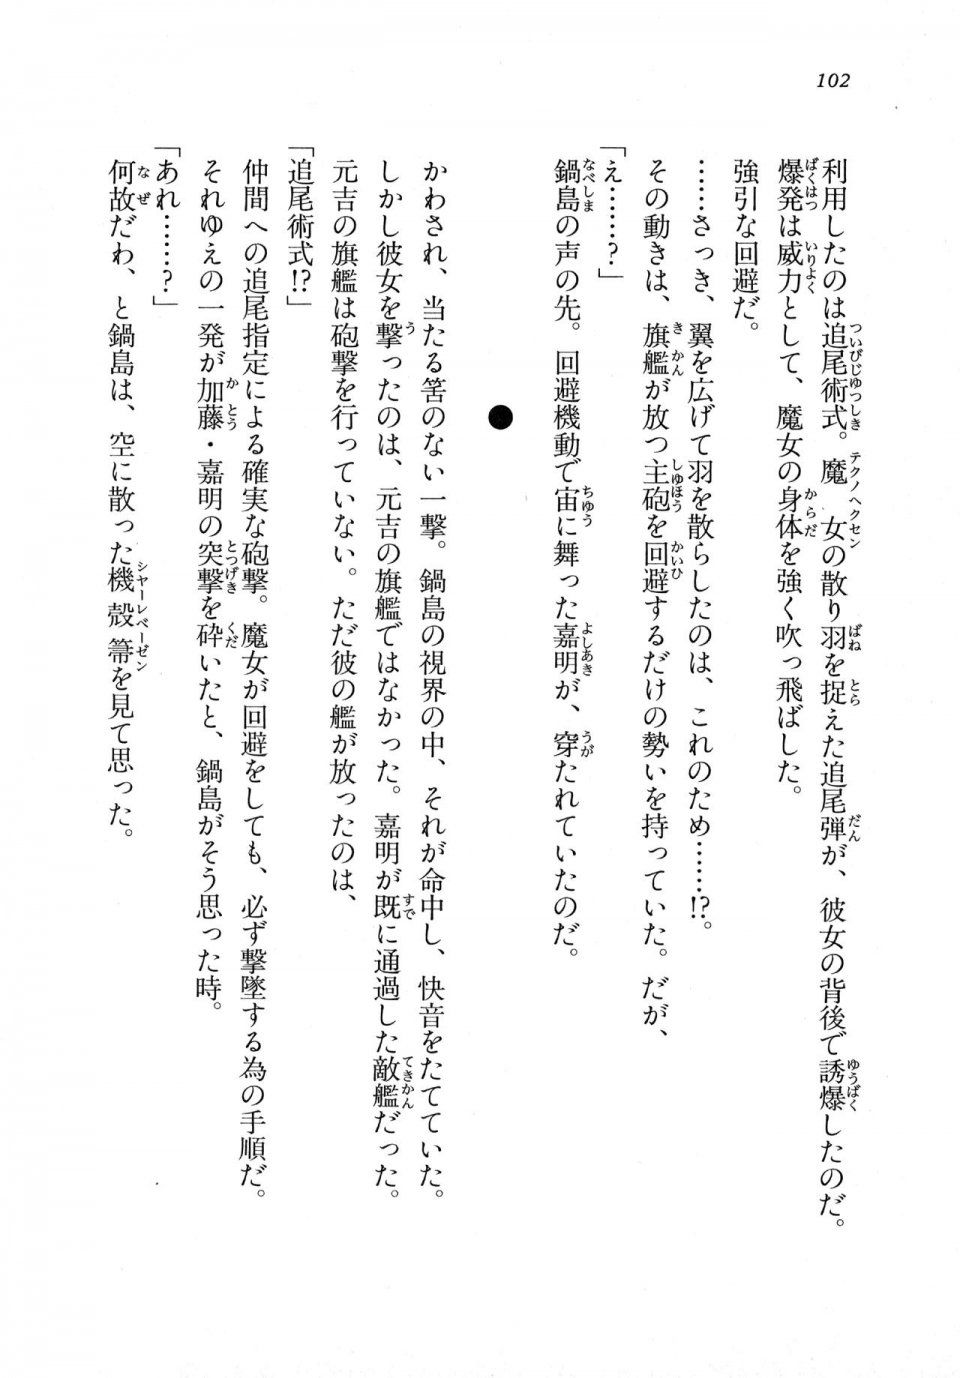 Kyoukai Senjou no Horizon LN Vol 18(7C) Part 1 - Photo #102